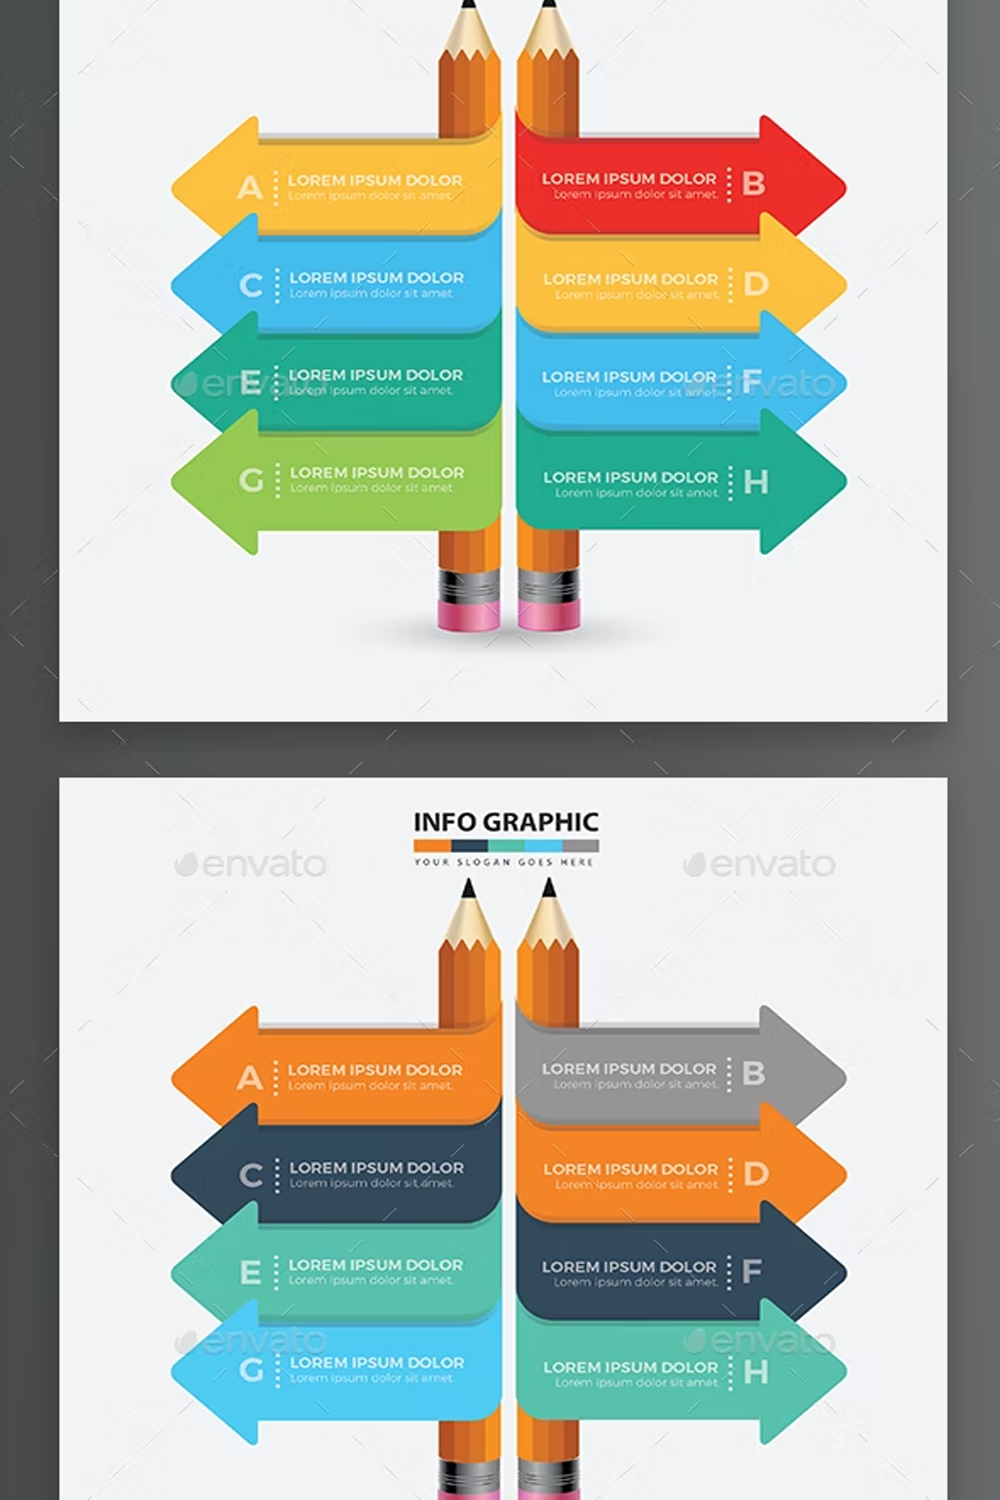 Illustrations pencil infographic design of pinterest.